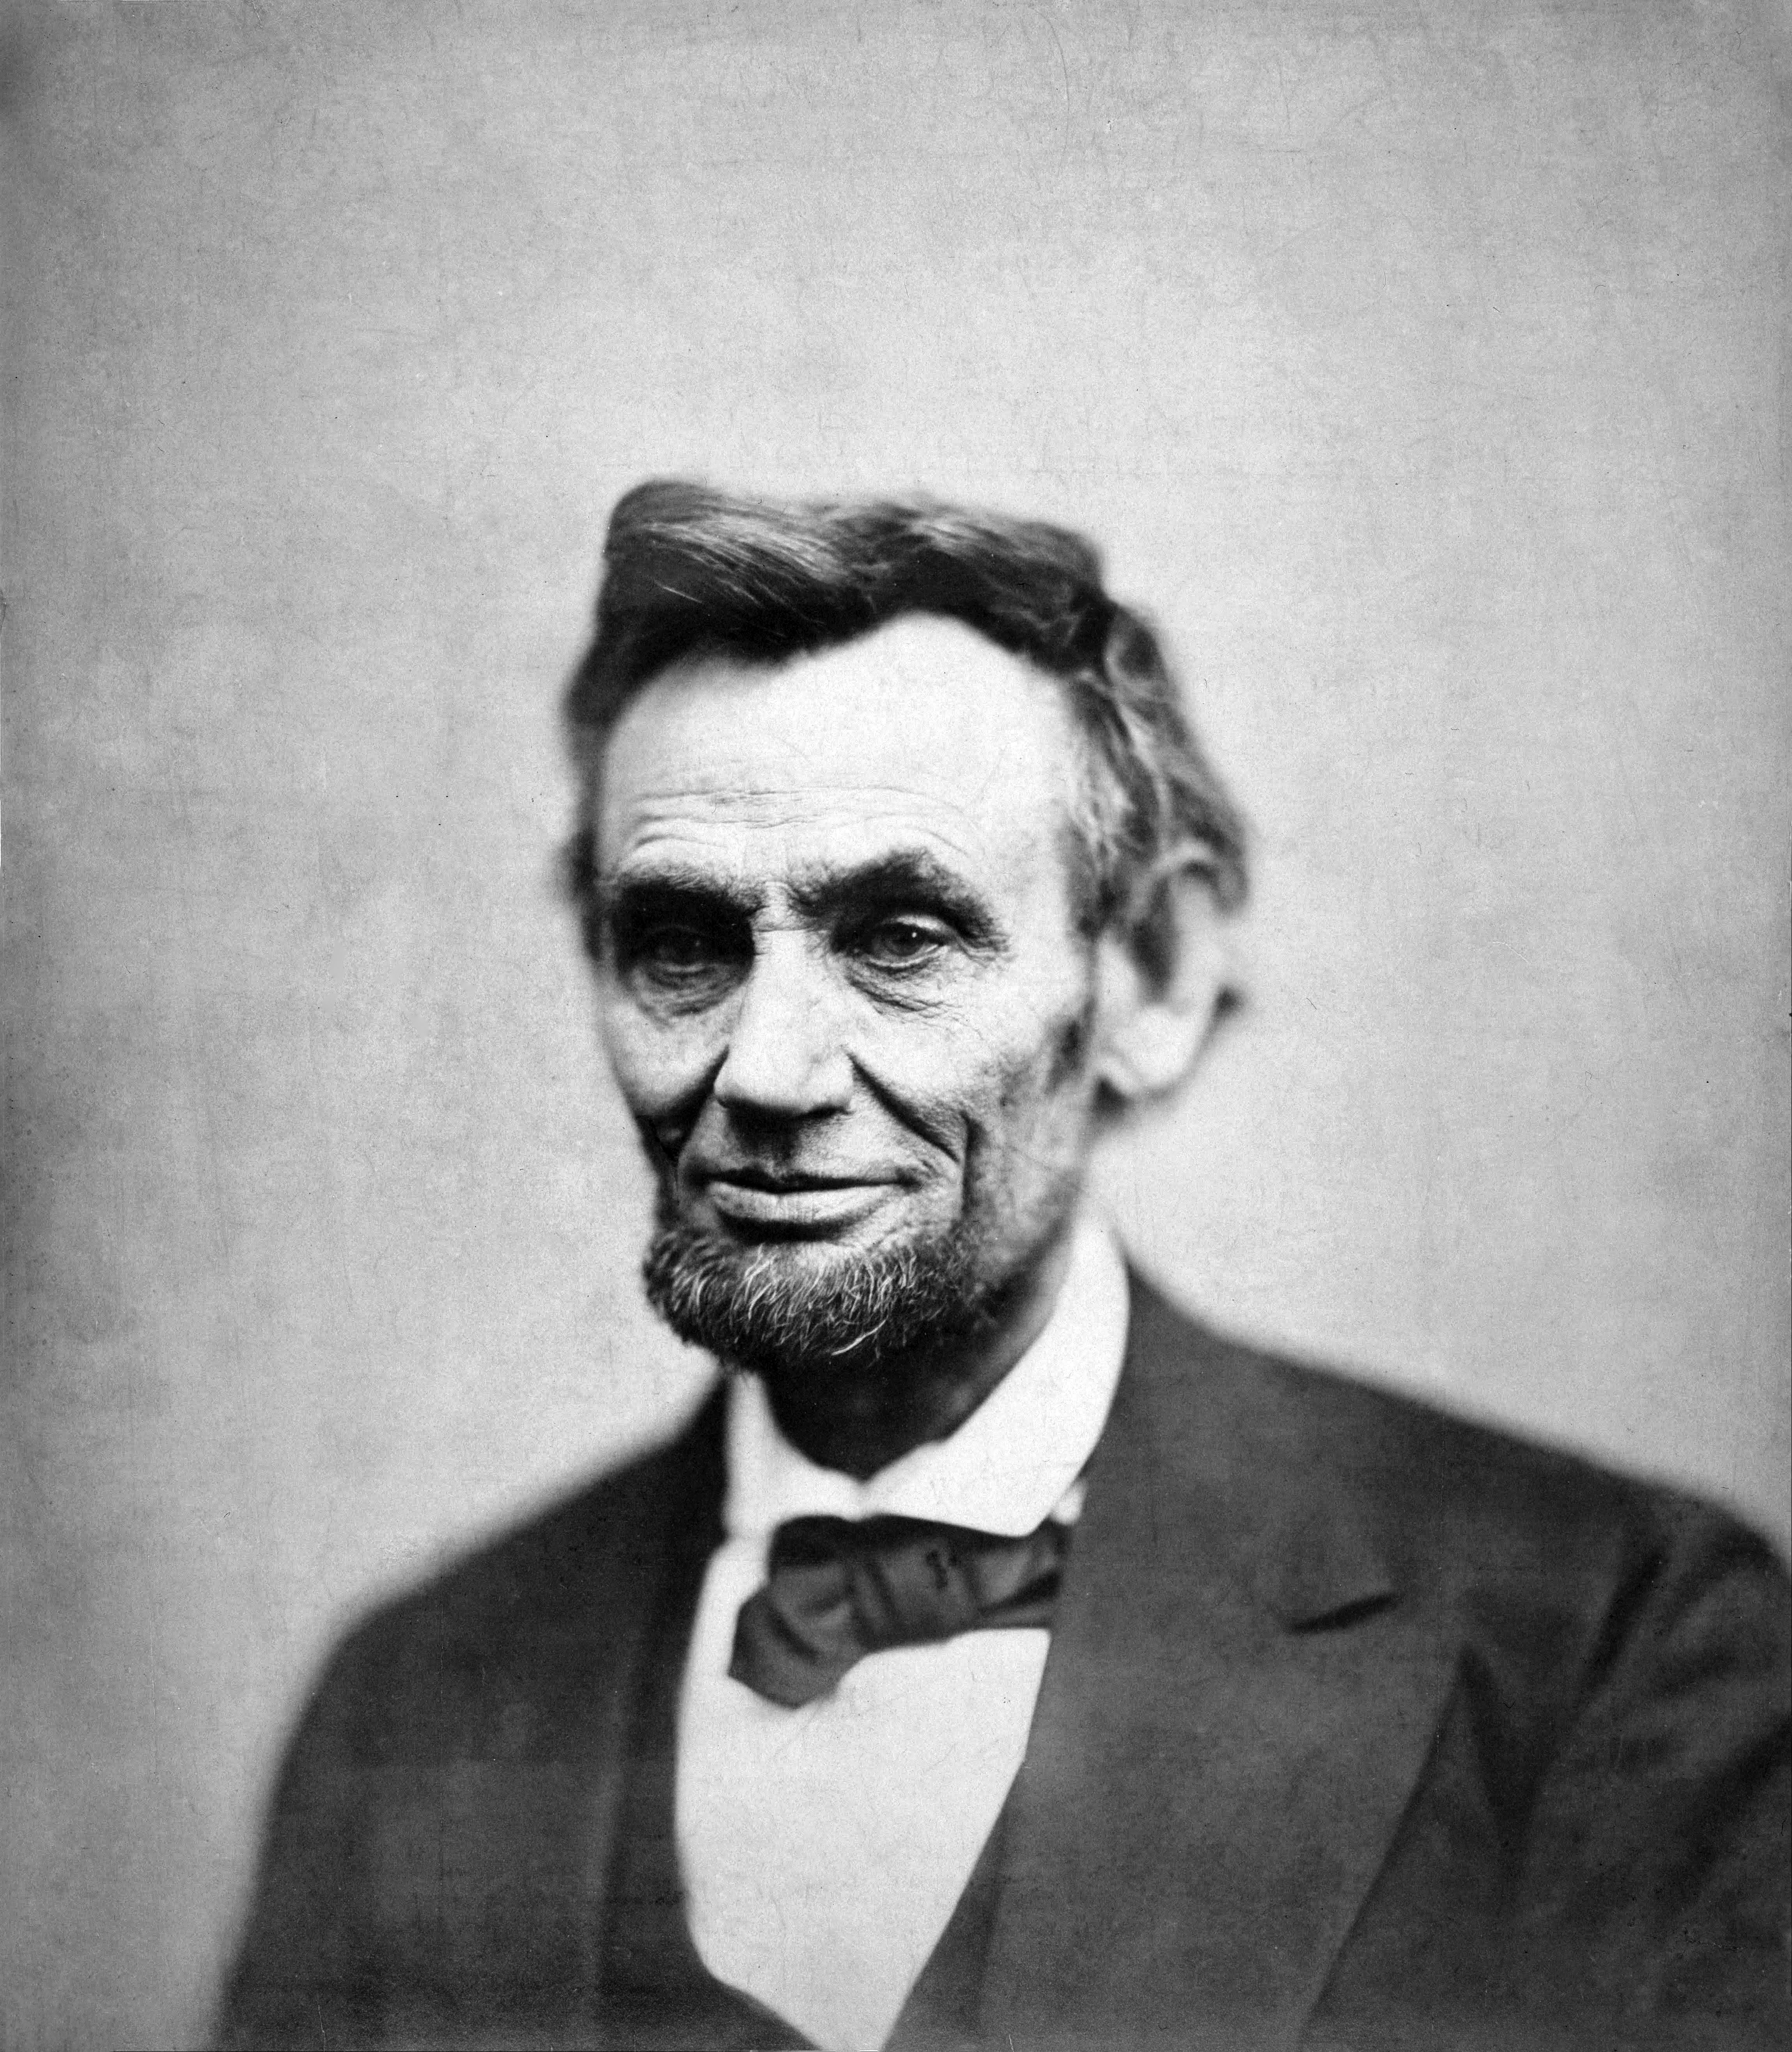 Abraham Lincoln - Wikipedia